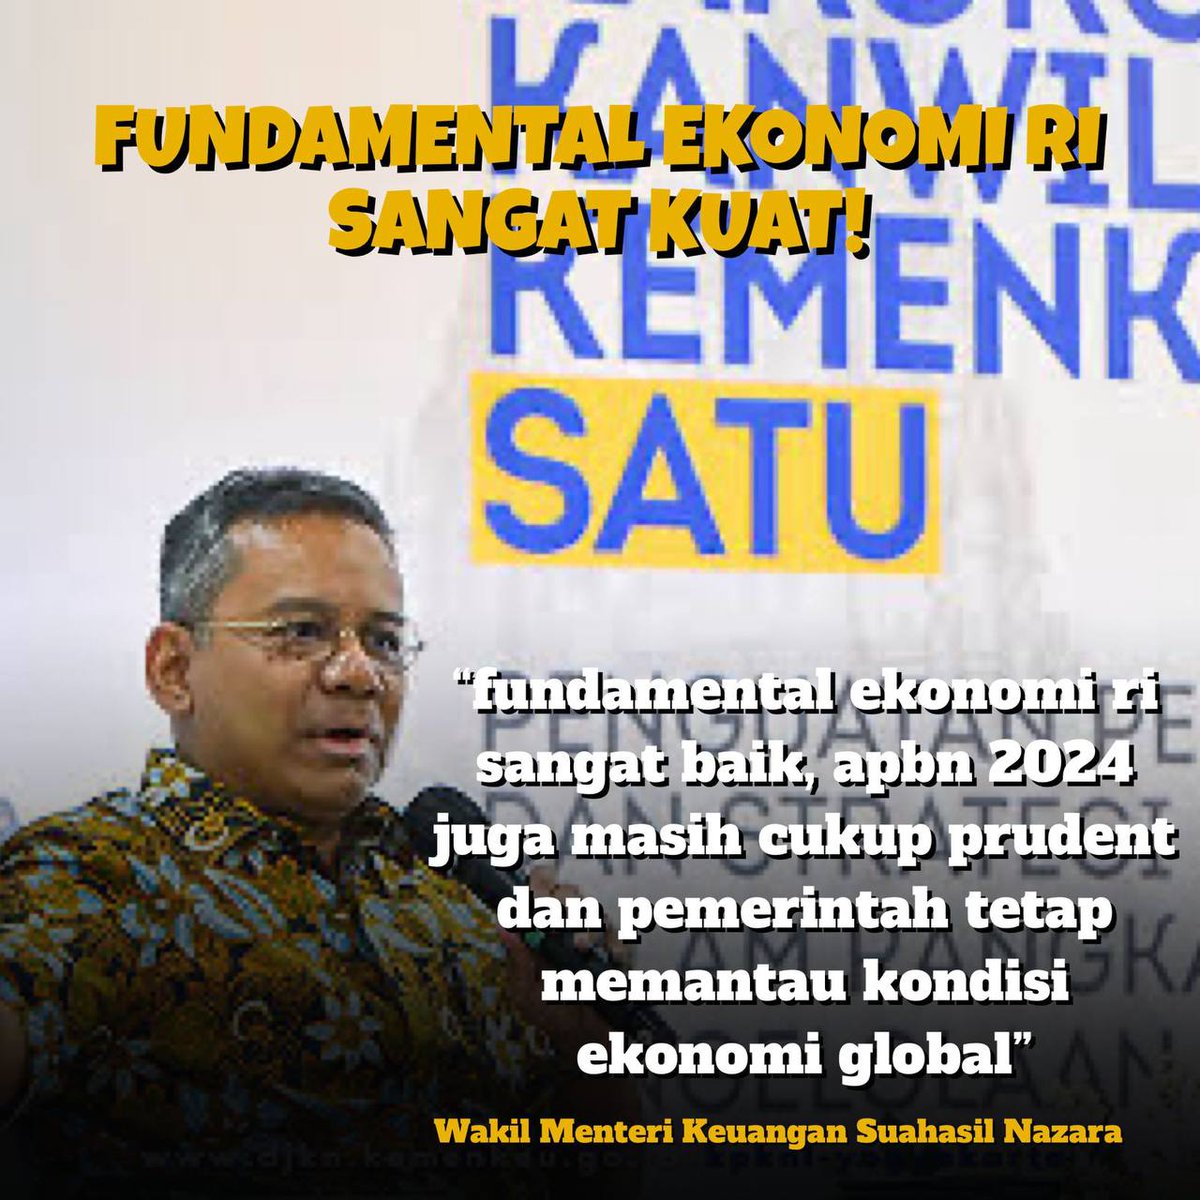 UMKM Bangkit Indonesia Maju

Bea Cukai
ekonomi